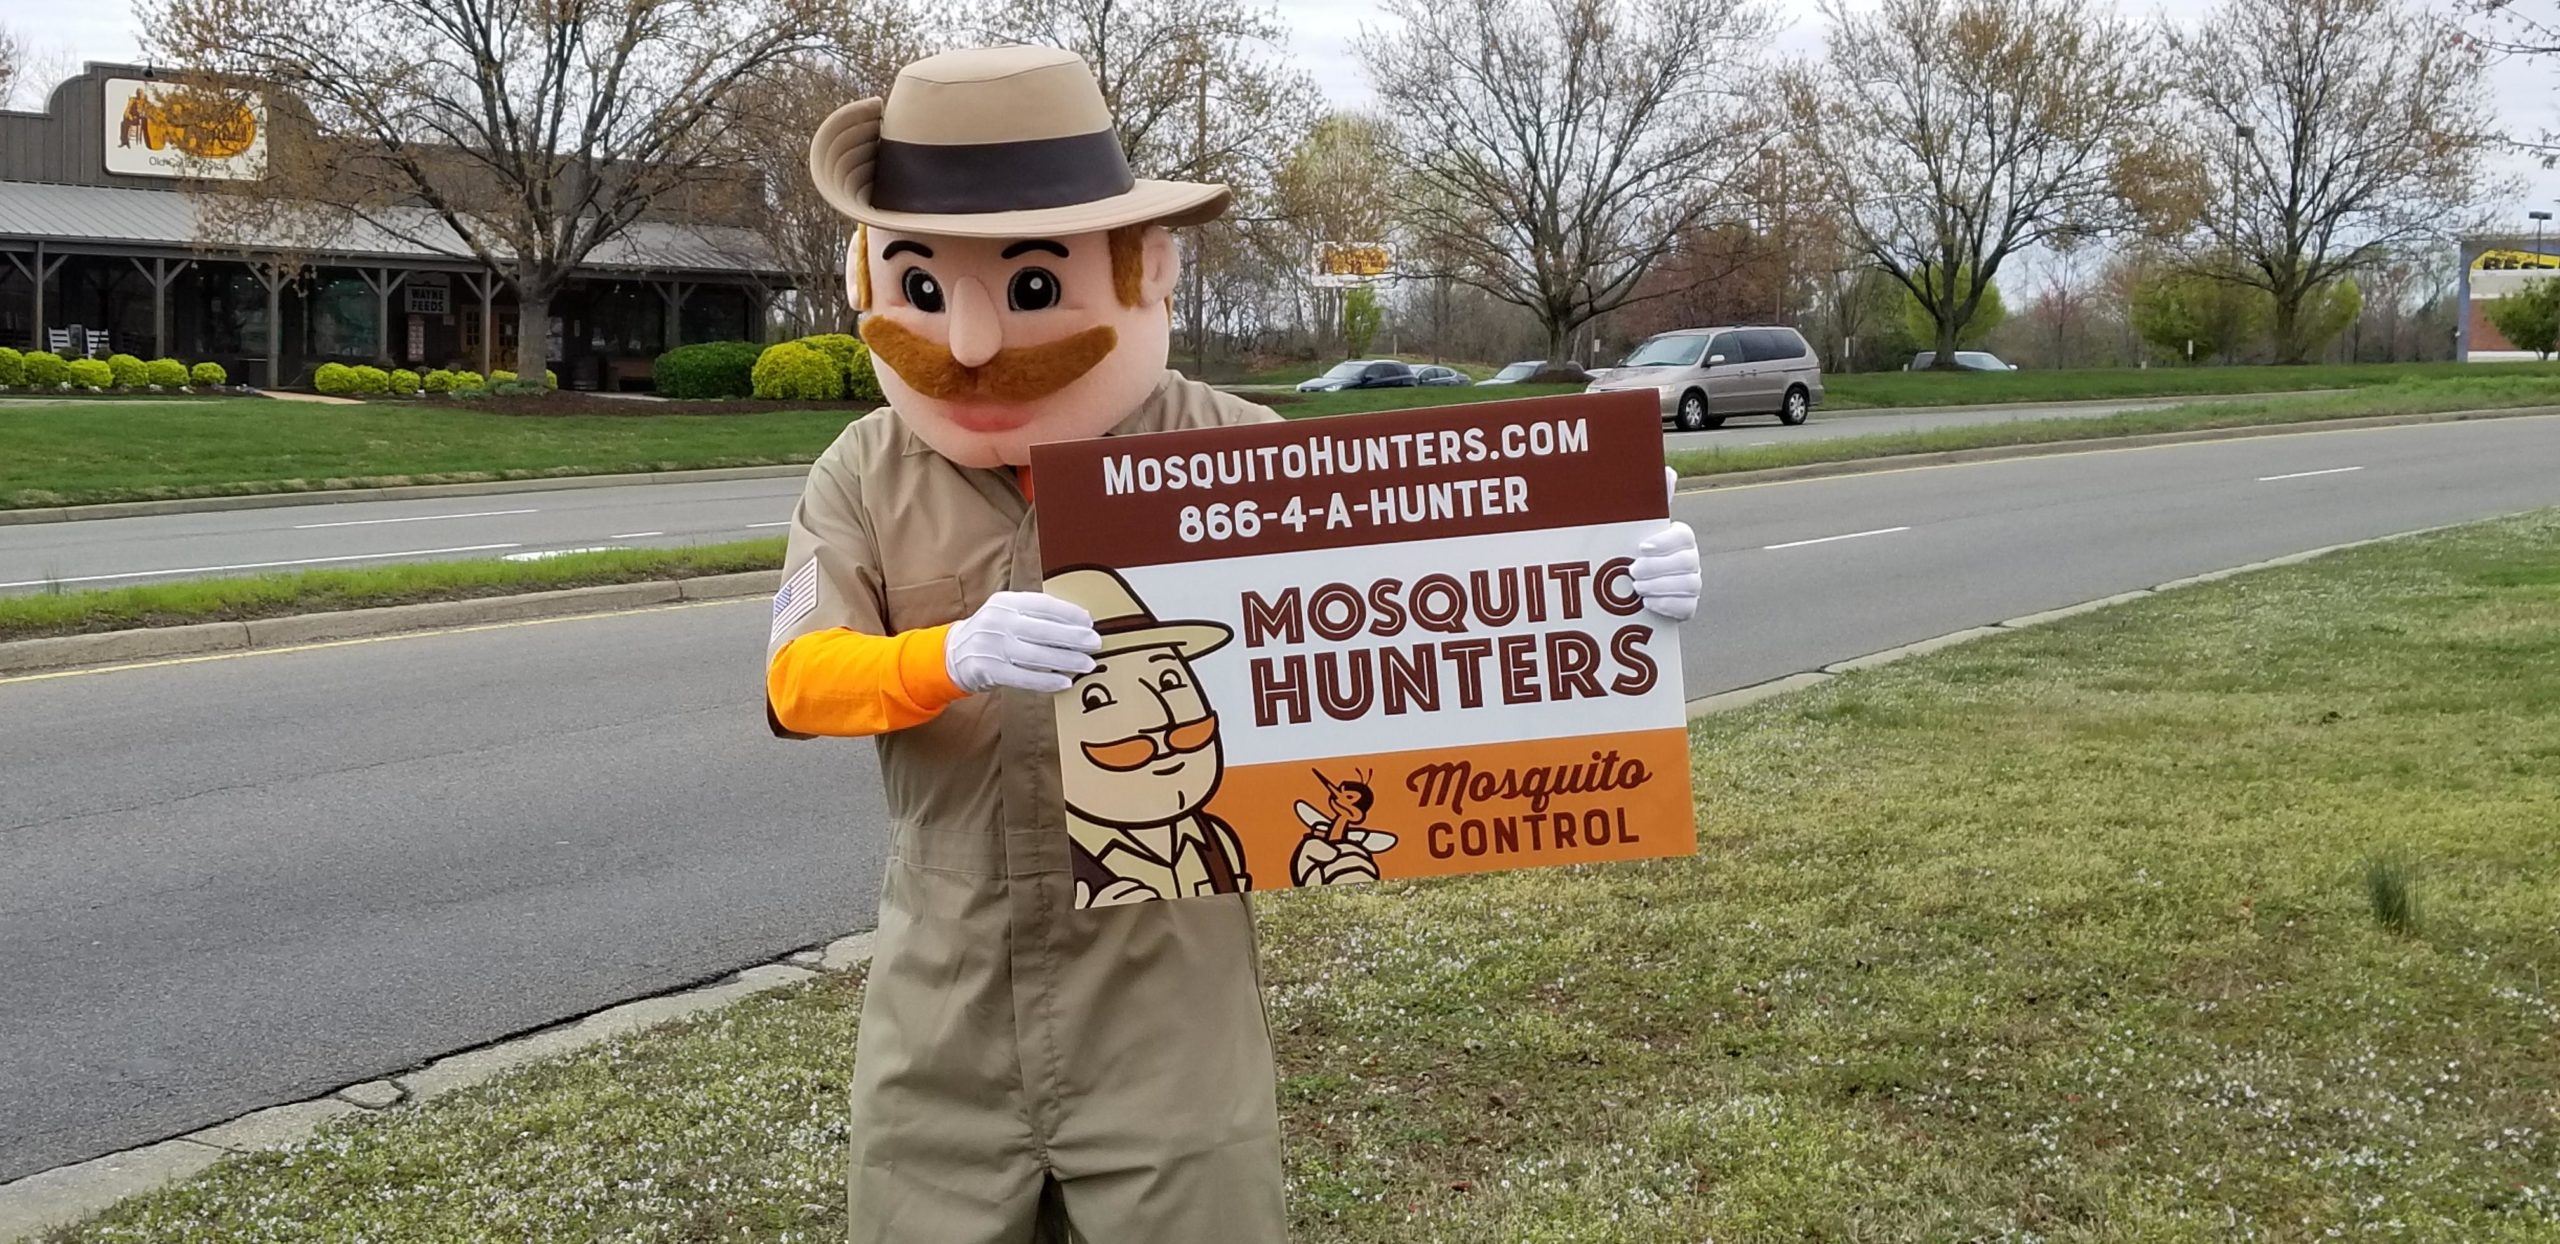 Gunther advertising mosquito control in Mechanicsville VA